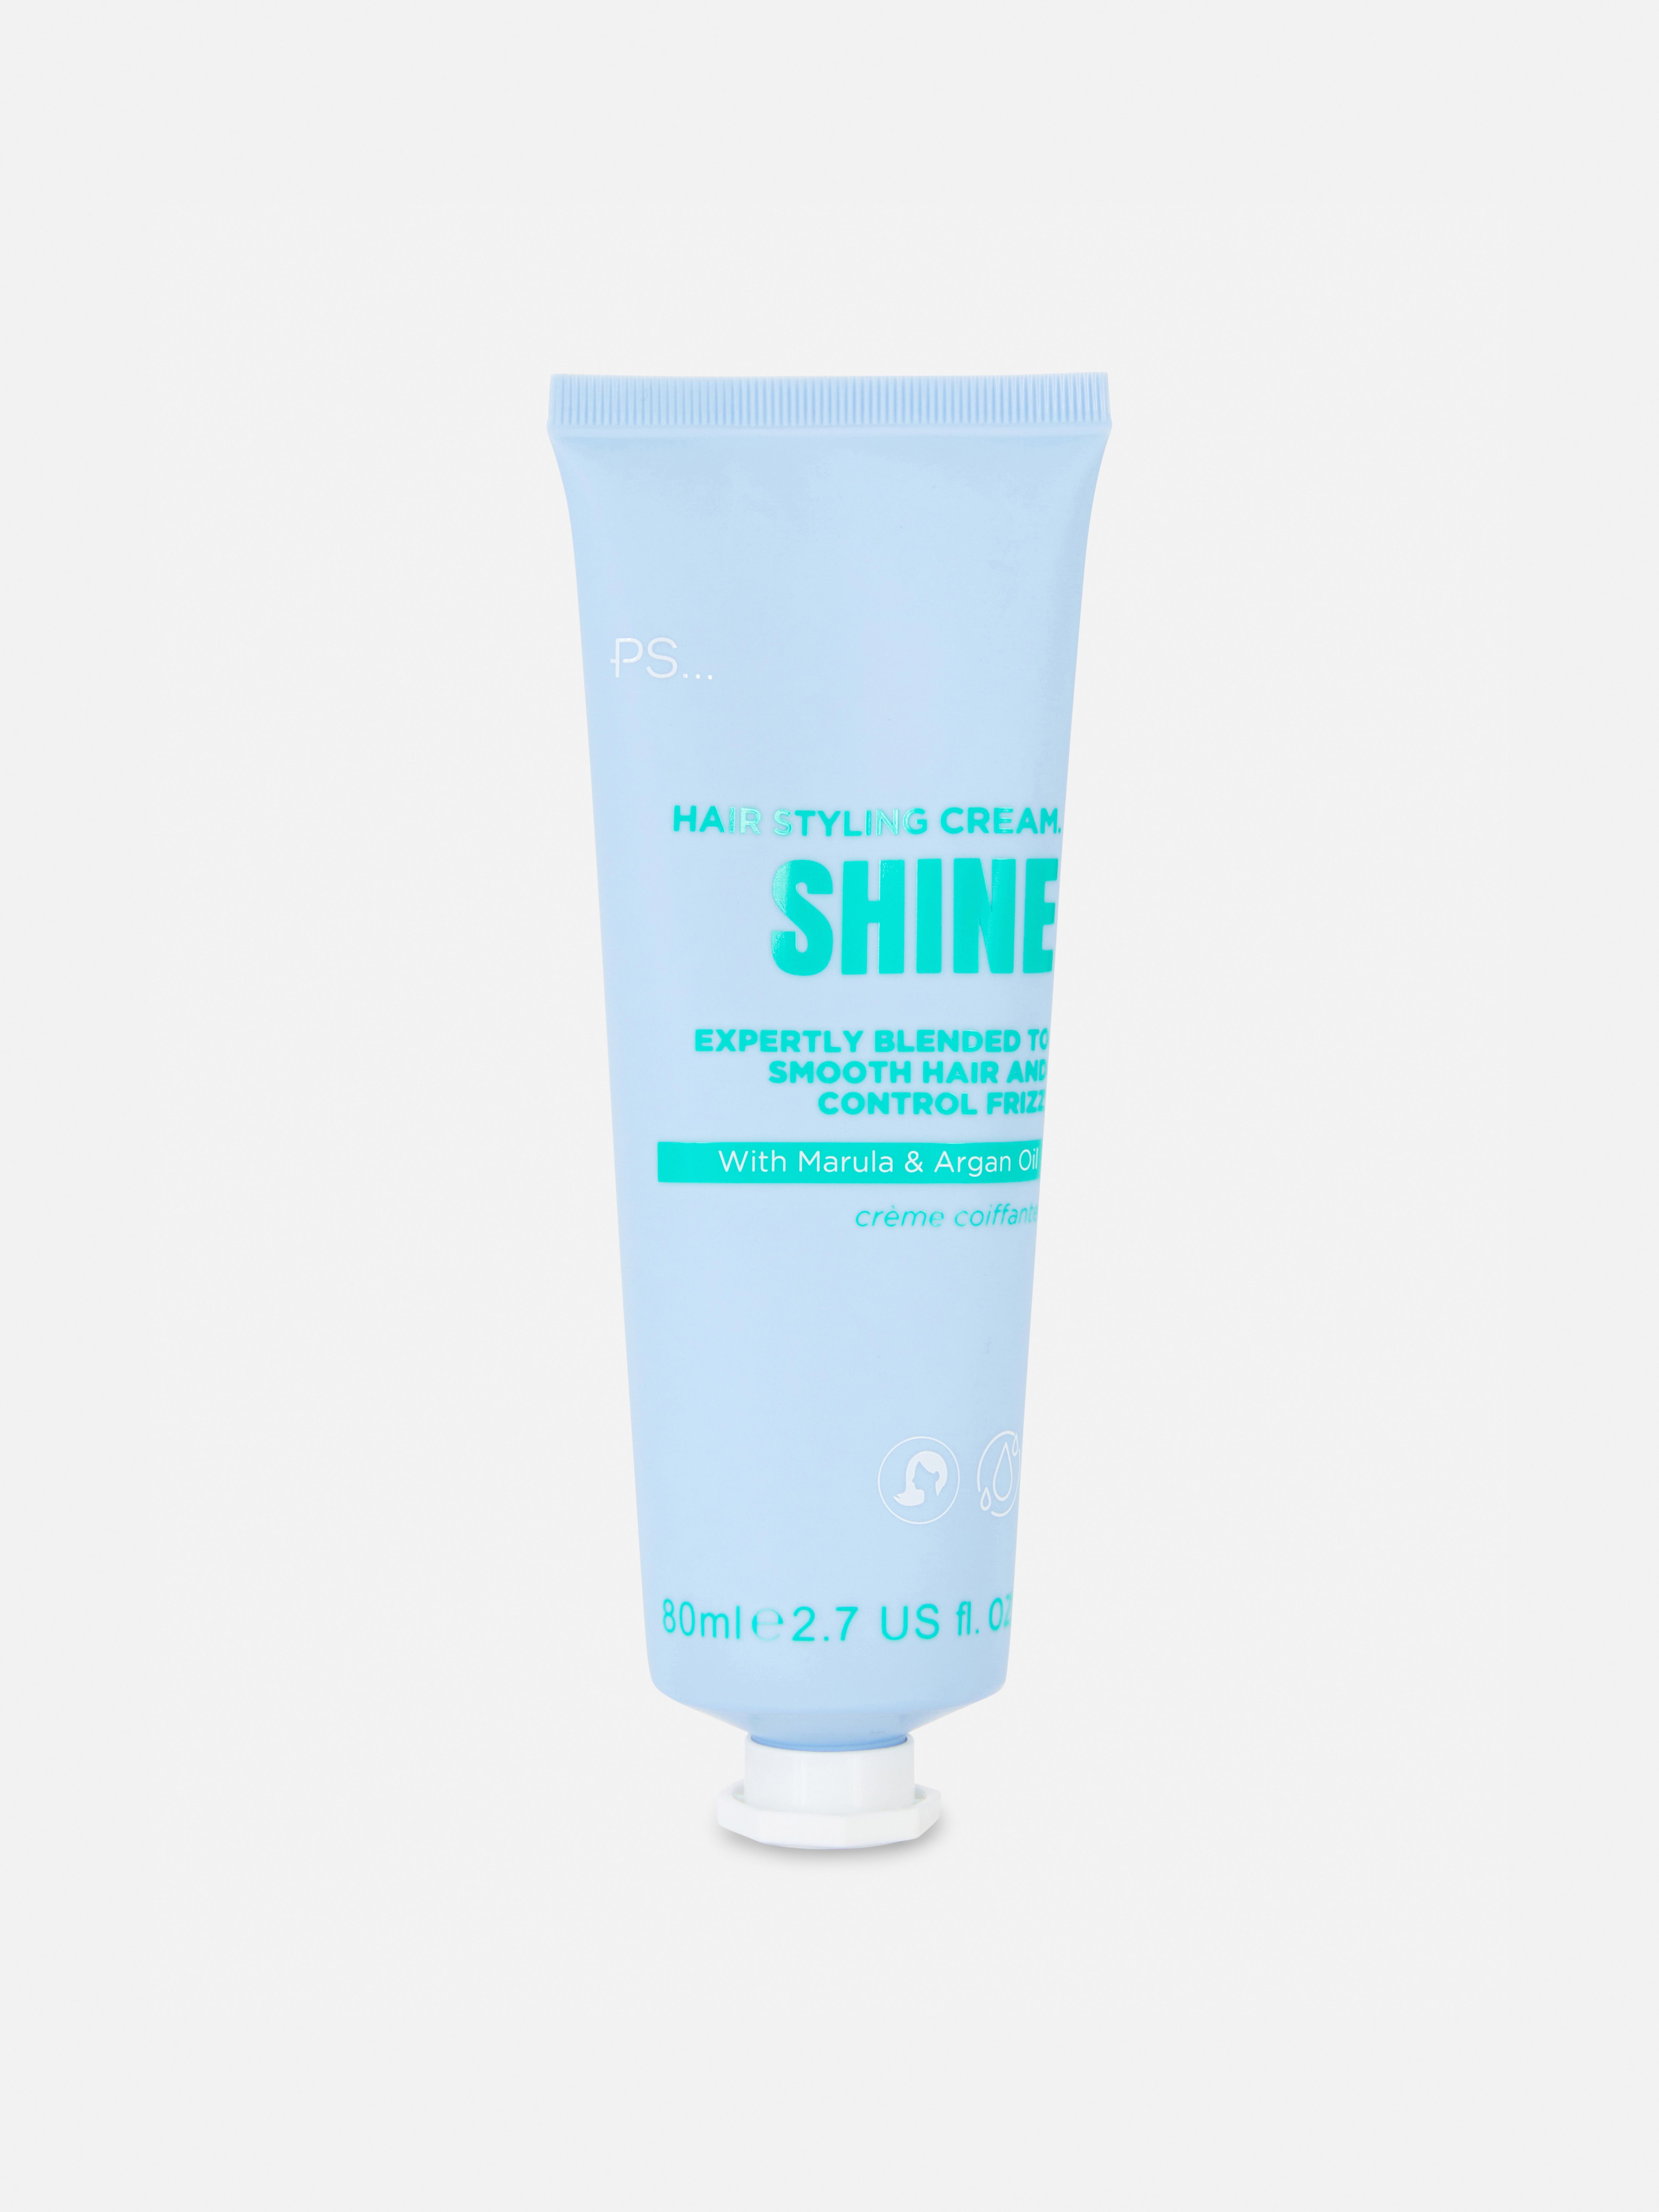 PS Shine Hair Styling Cream